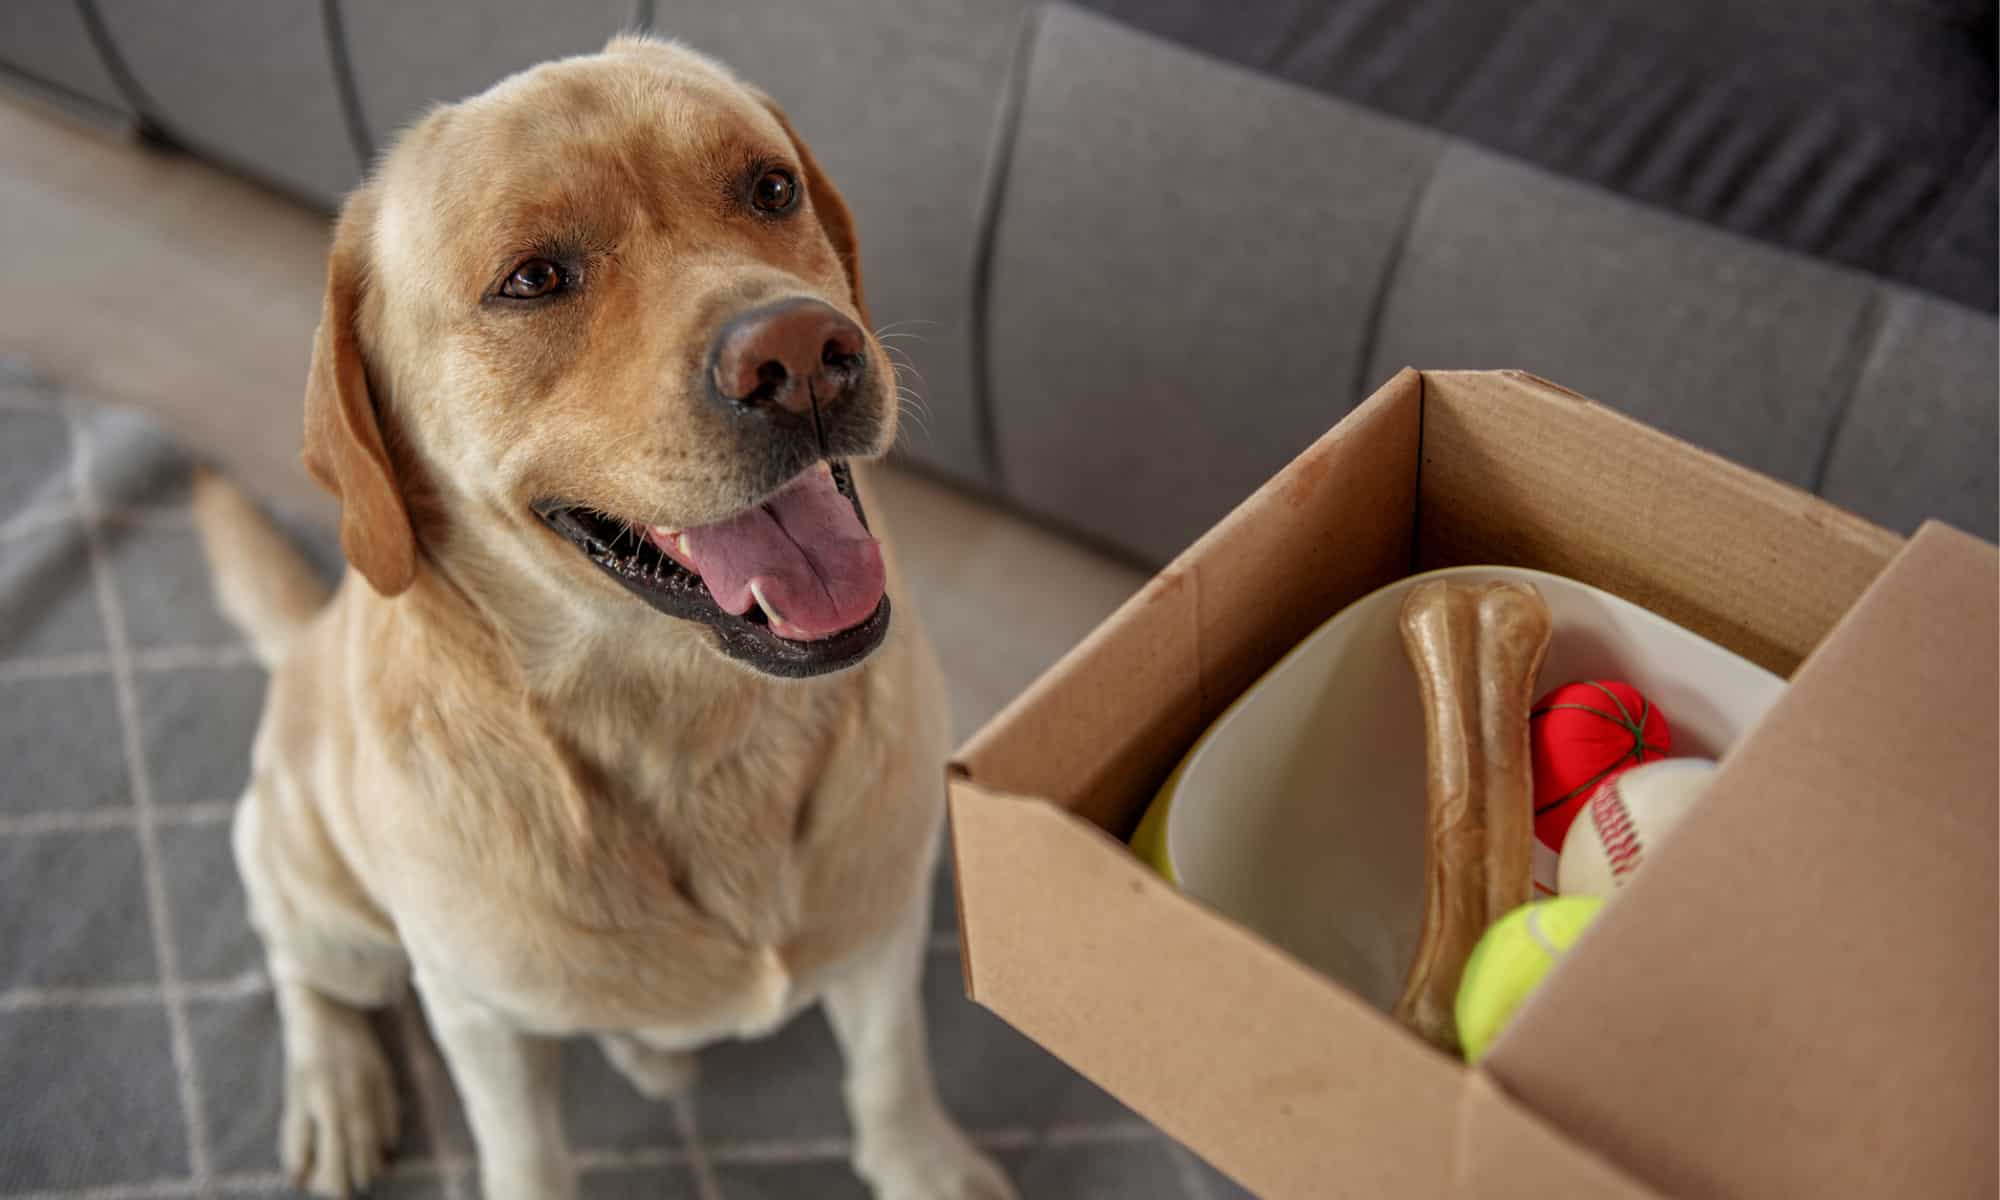 A happy yellow Labrador retriever next to a shipment of presents